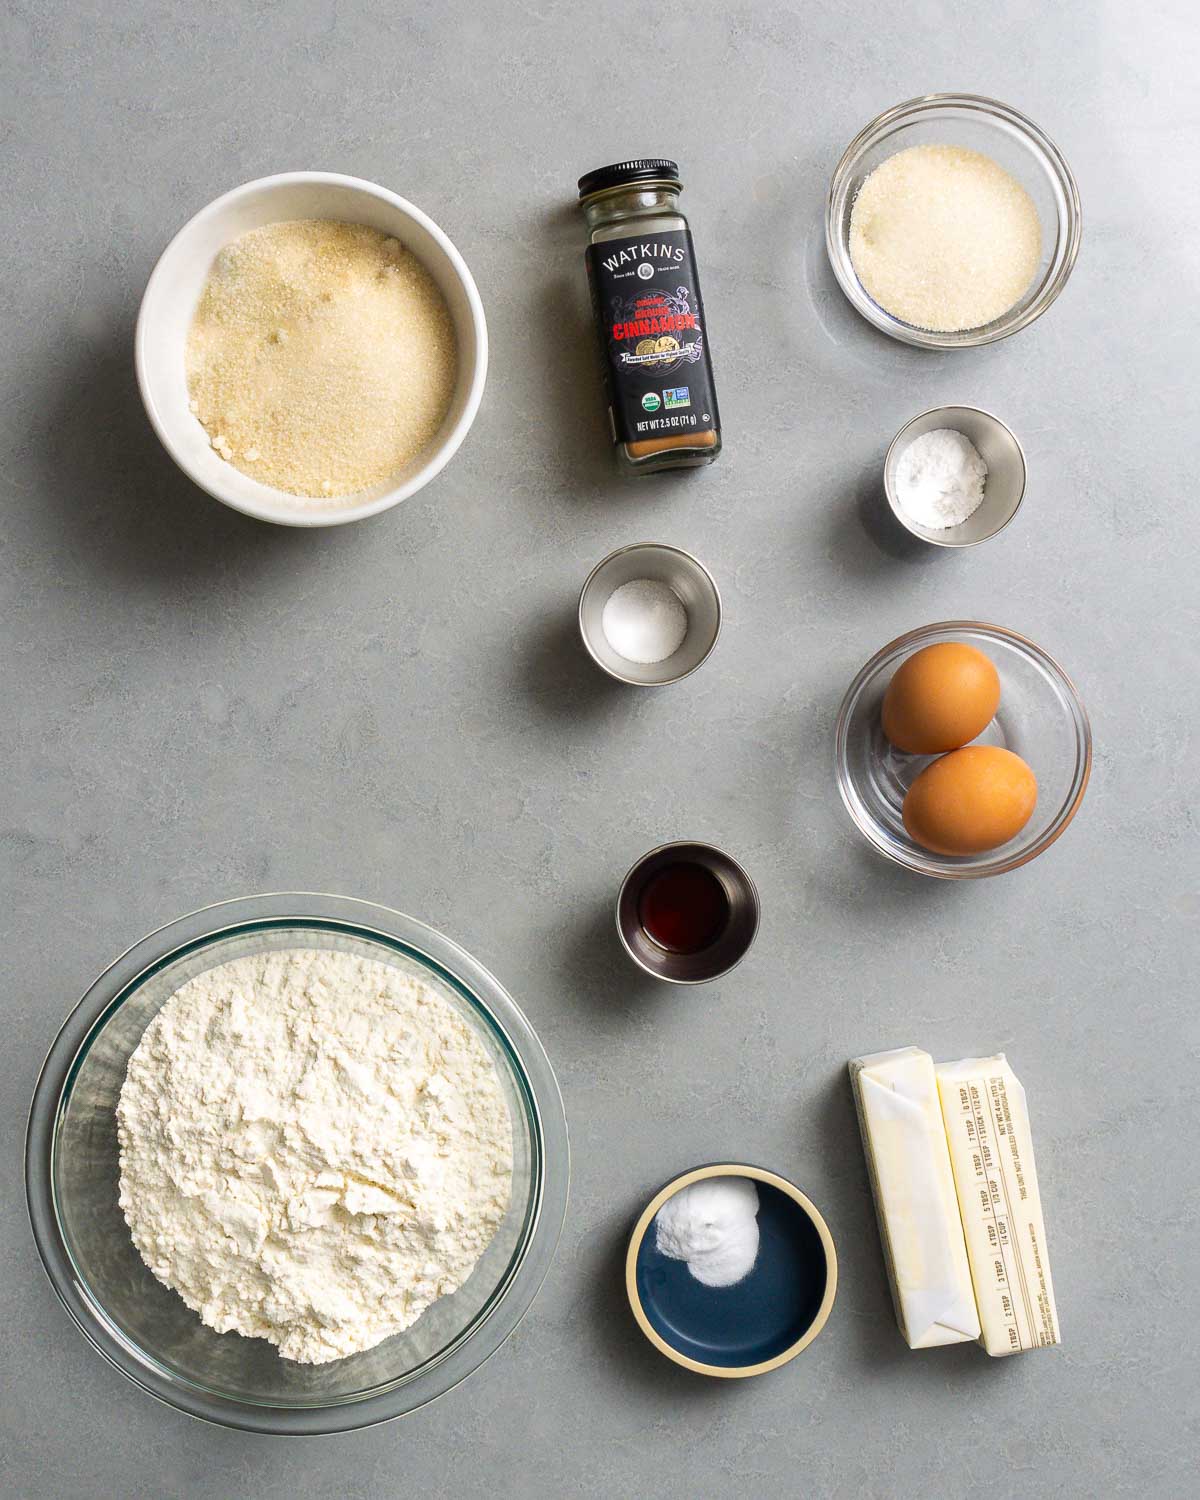 Ingredients shown: sugar, cinnamon, salt, cream of tartar, vanilla extract, eggs, flour, baking soda, and butter.